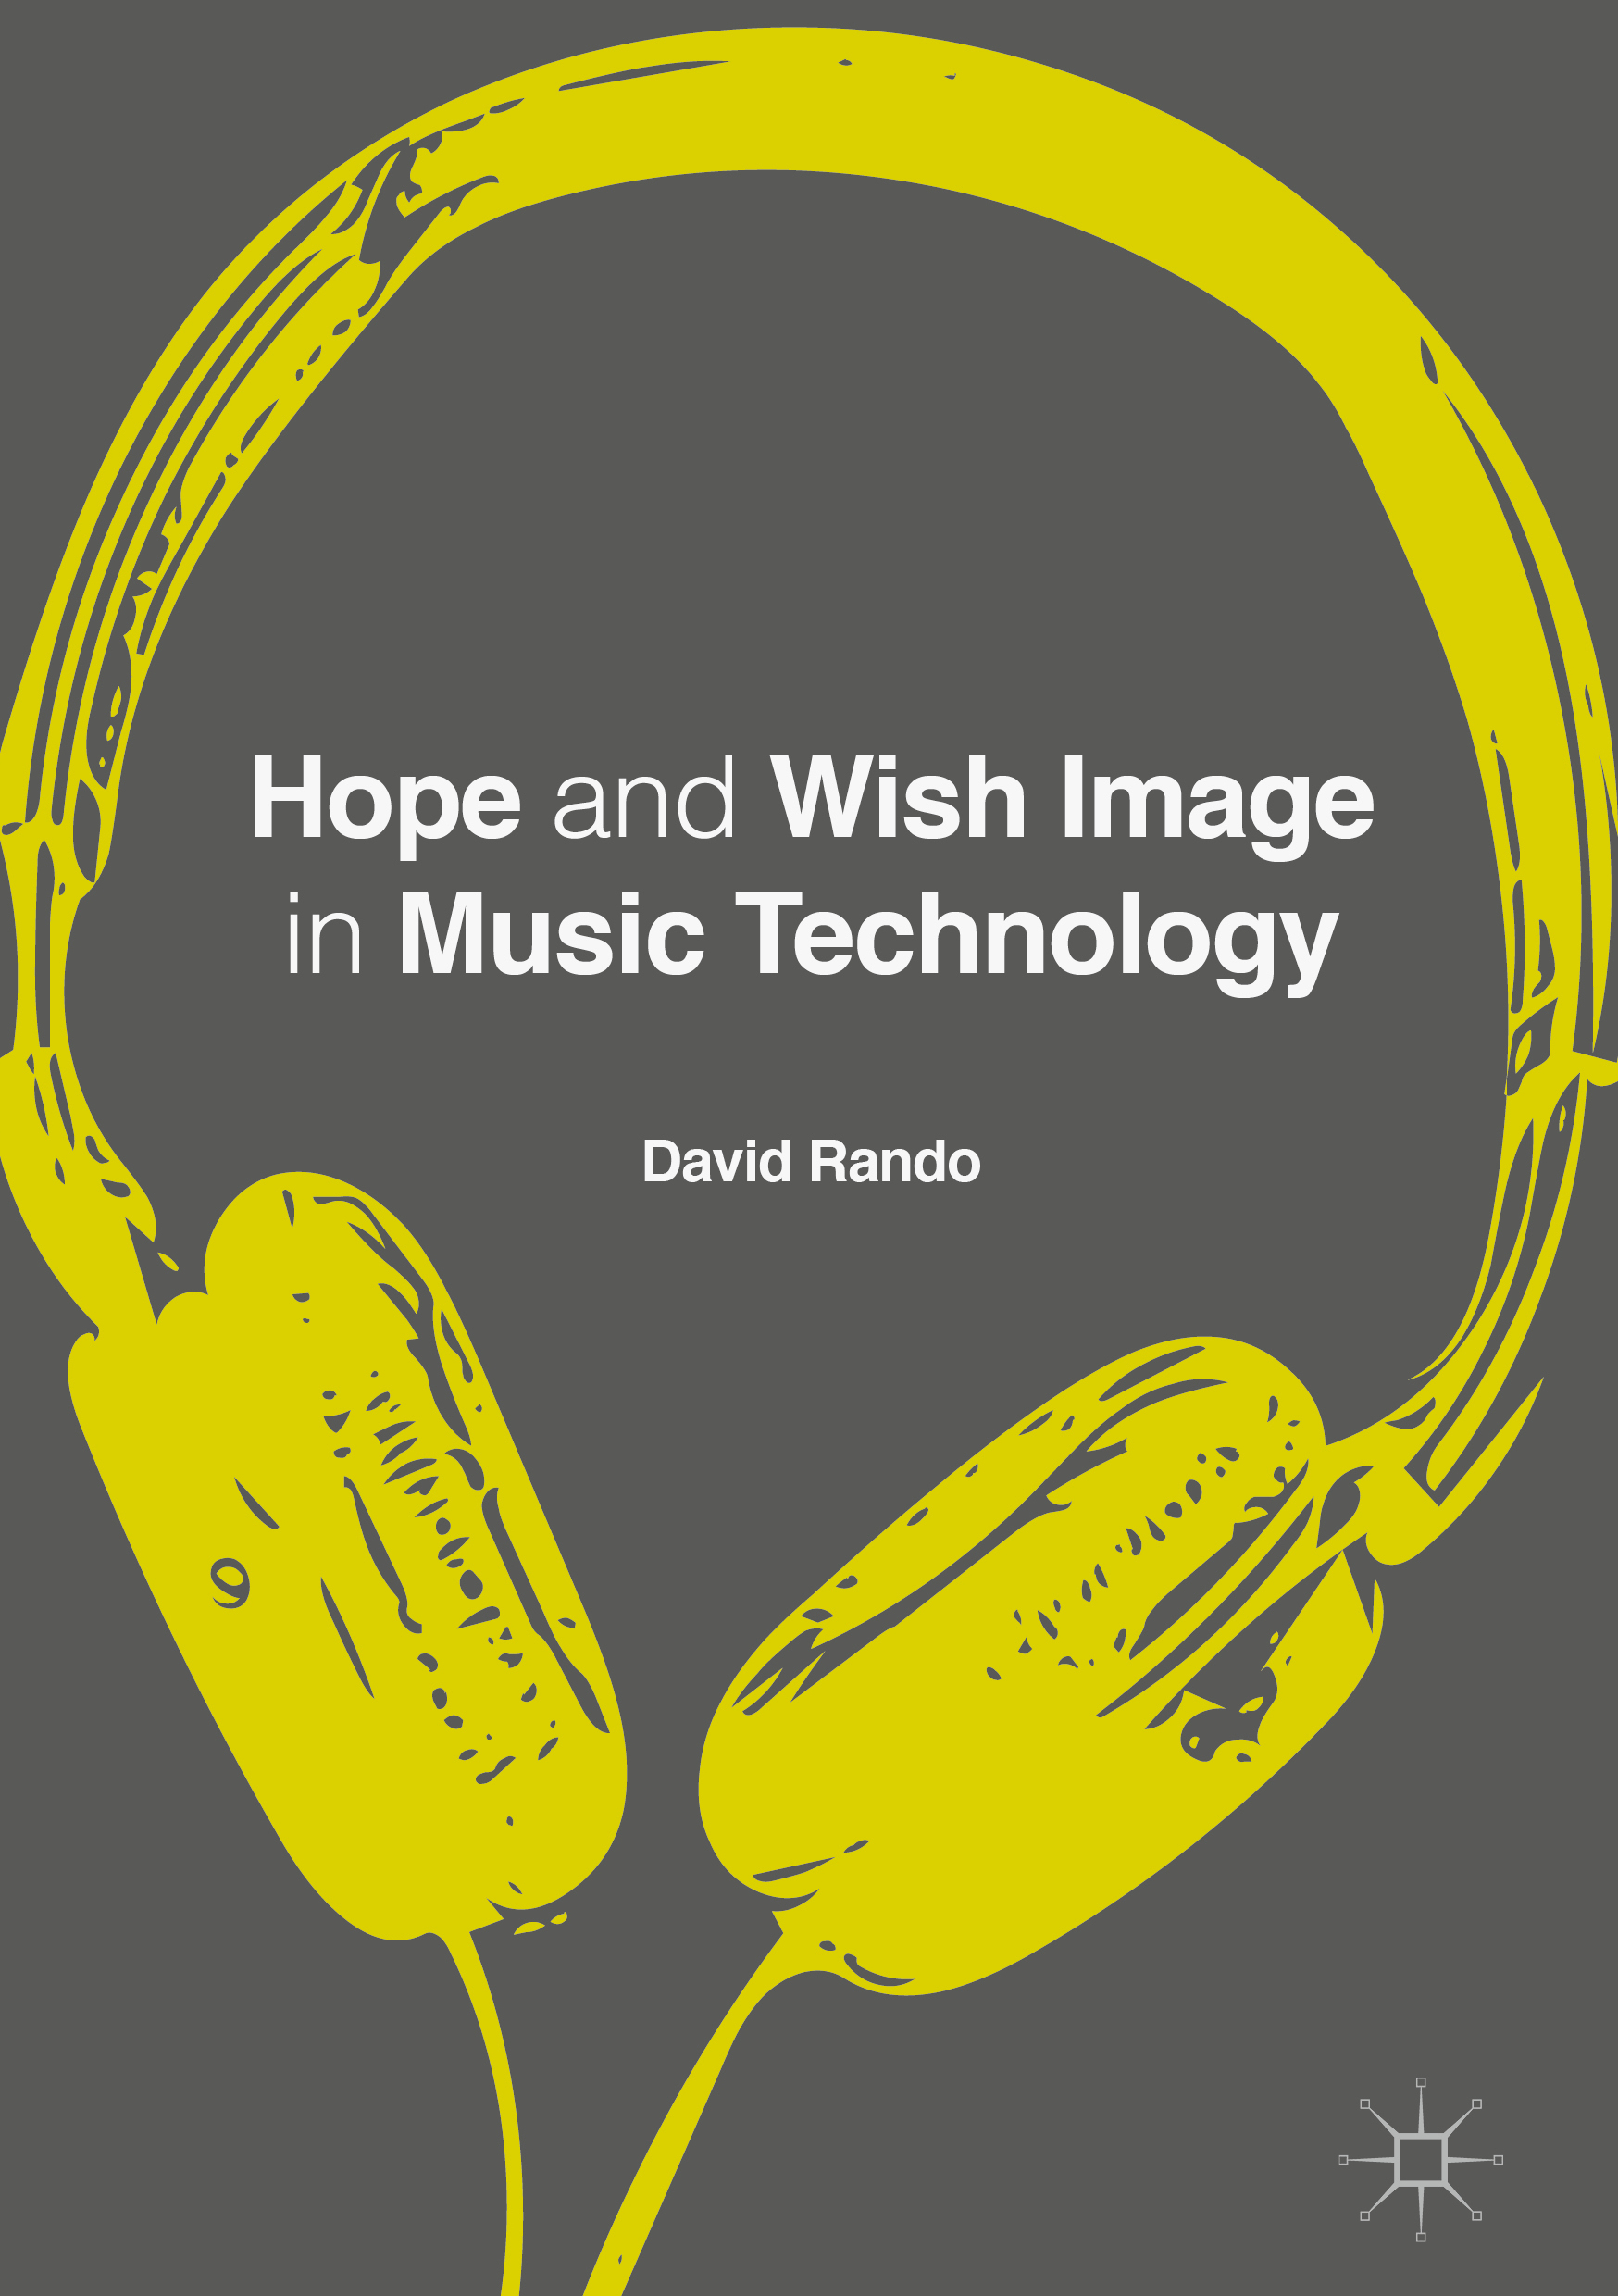 Rando, David P. - Hope and Wish Image in Music Technology, ebook